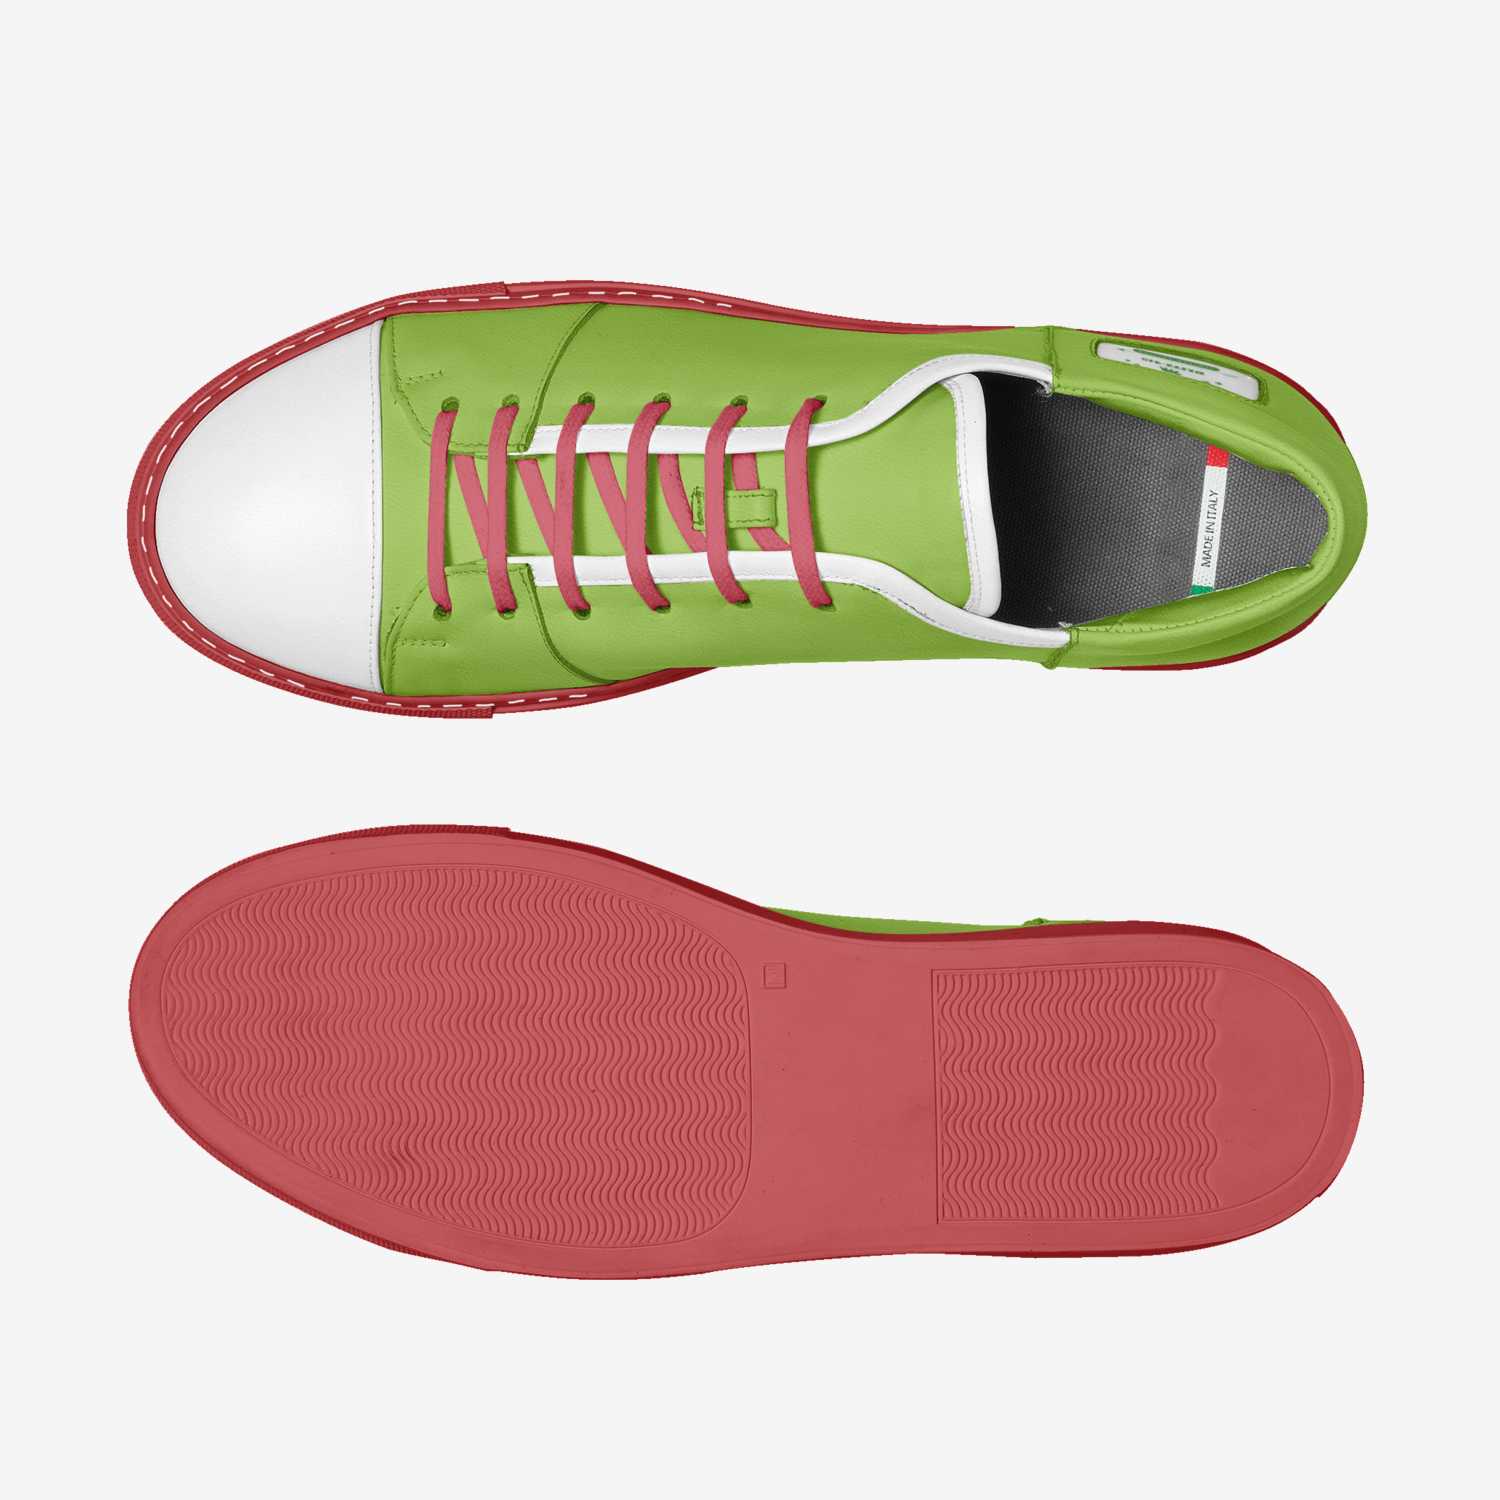 Yoshi | A Custom Shoe concept by Jalen Henderson